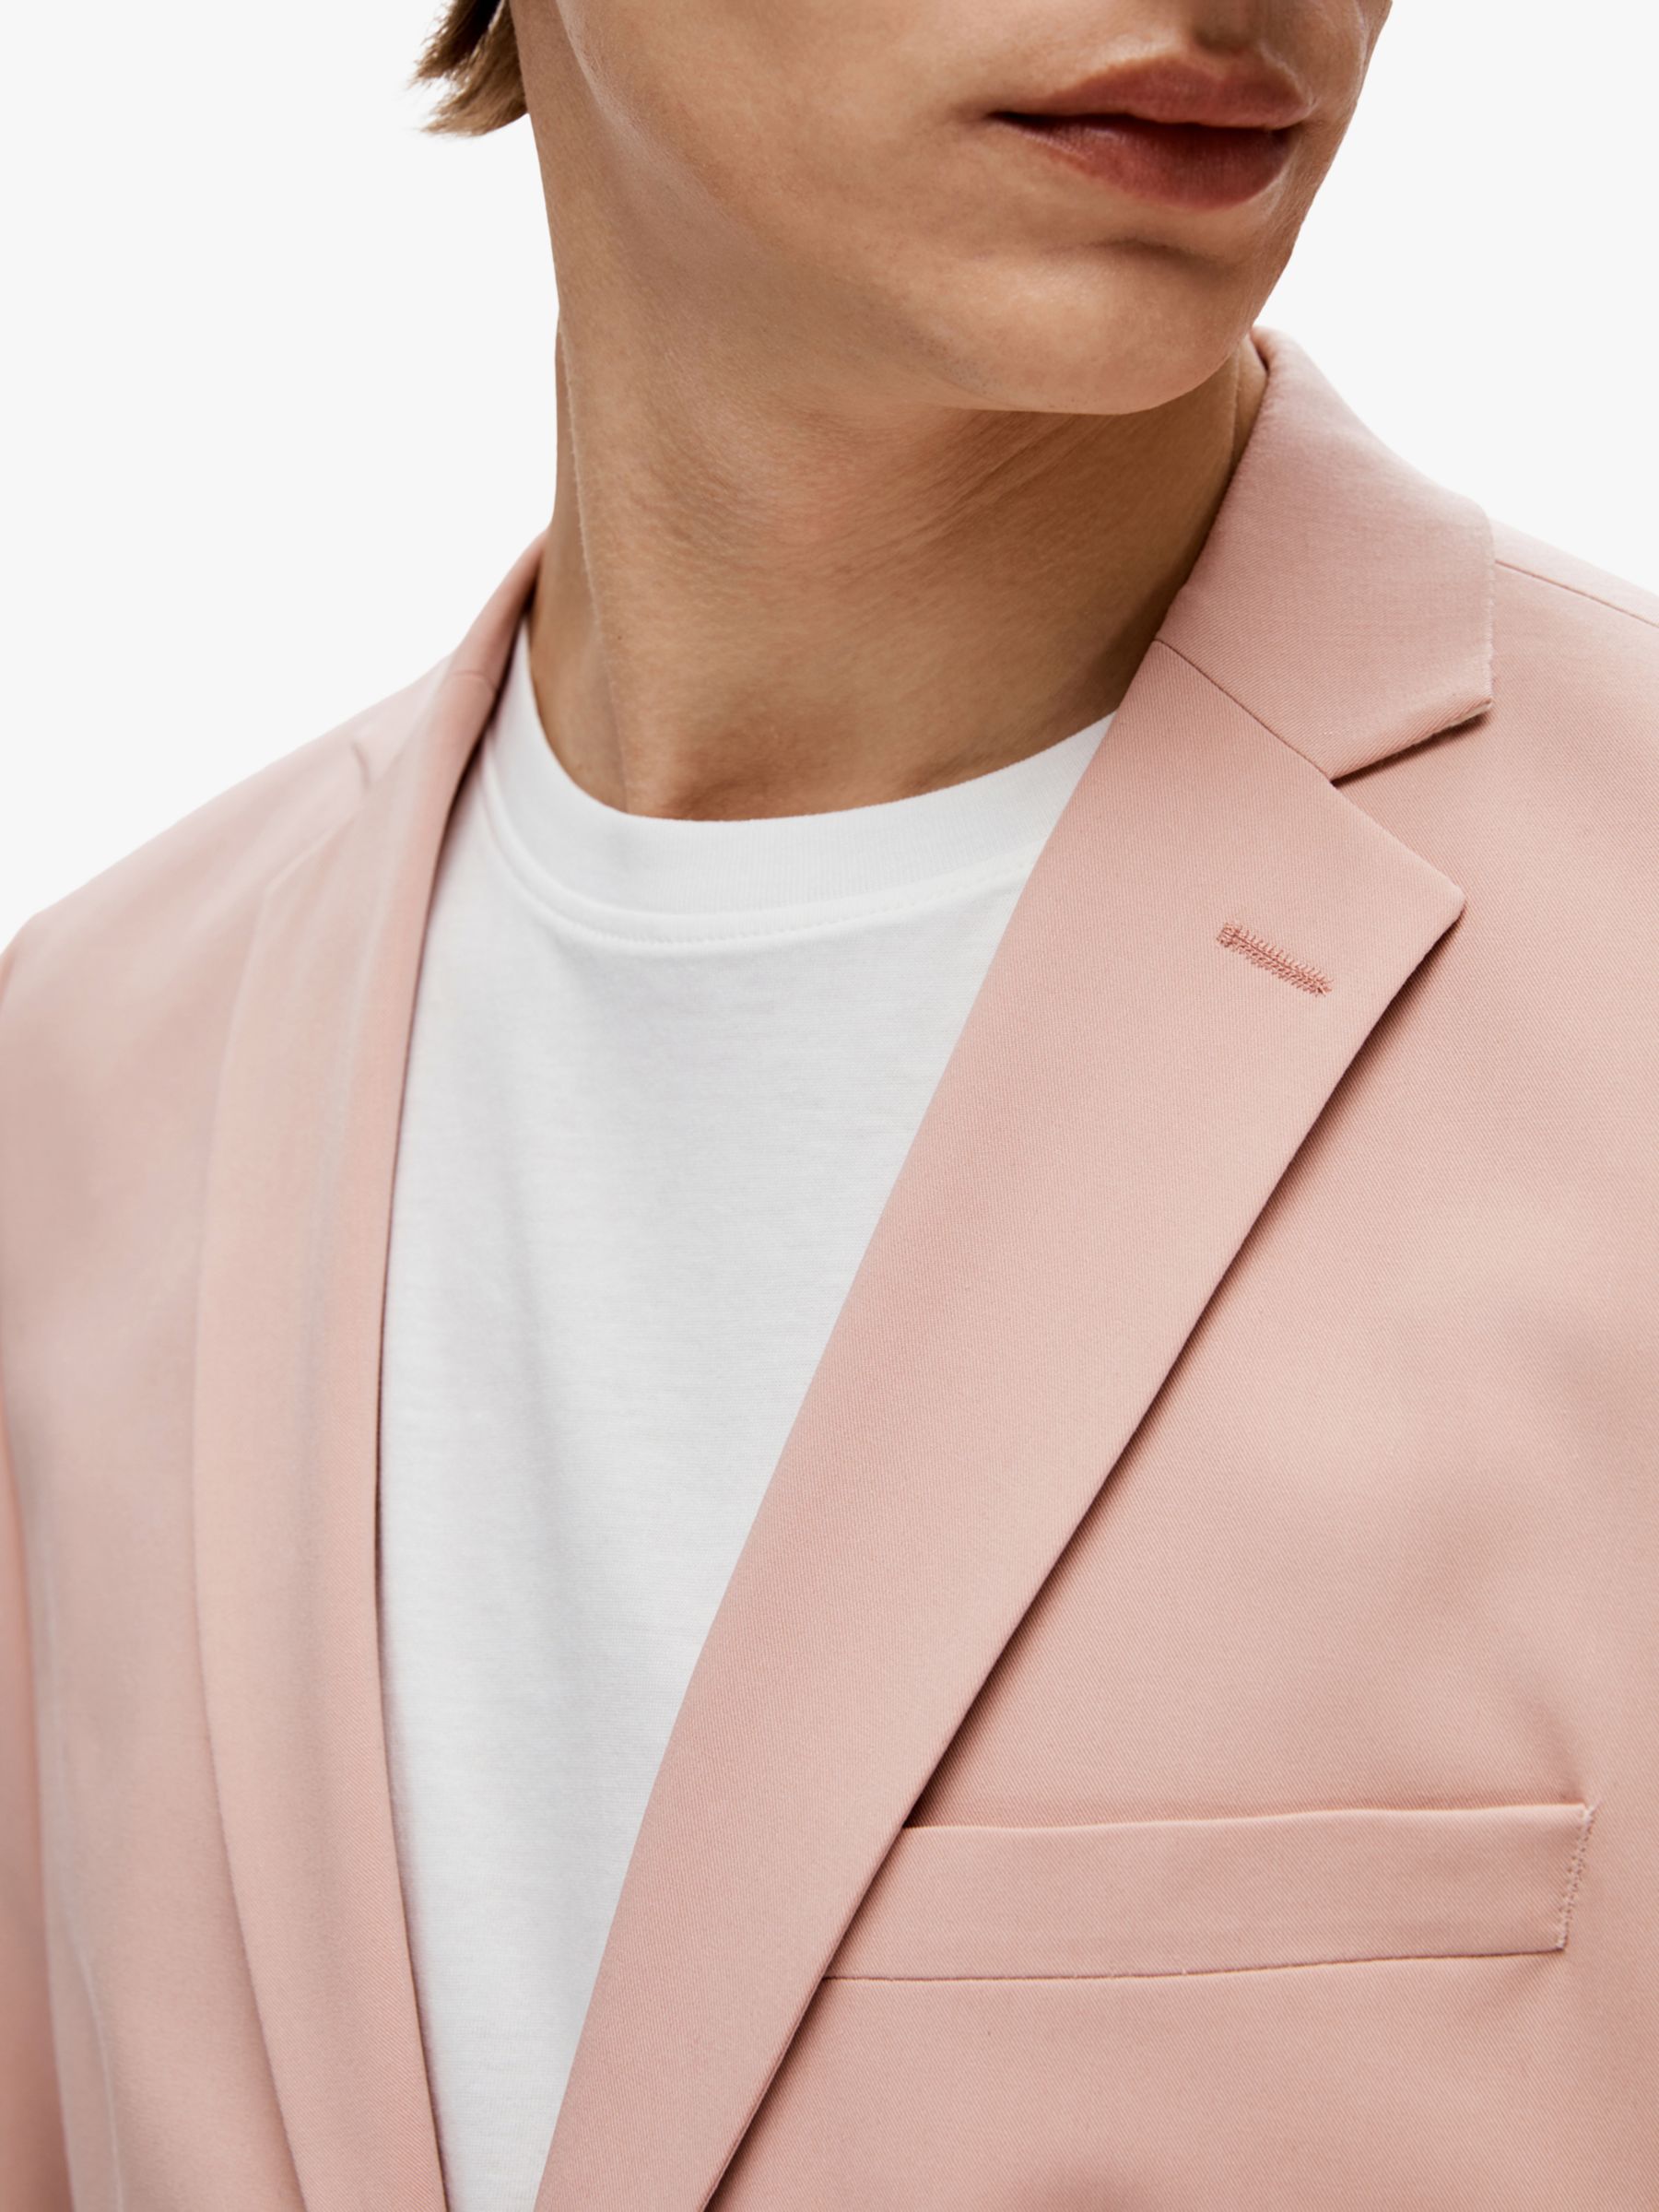 SELECTED HOMME Slim Fit Suit Jacket, Pink, 38R